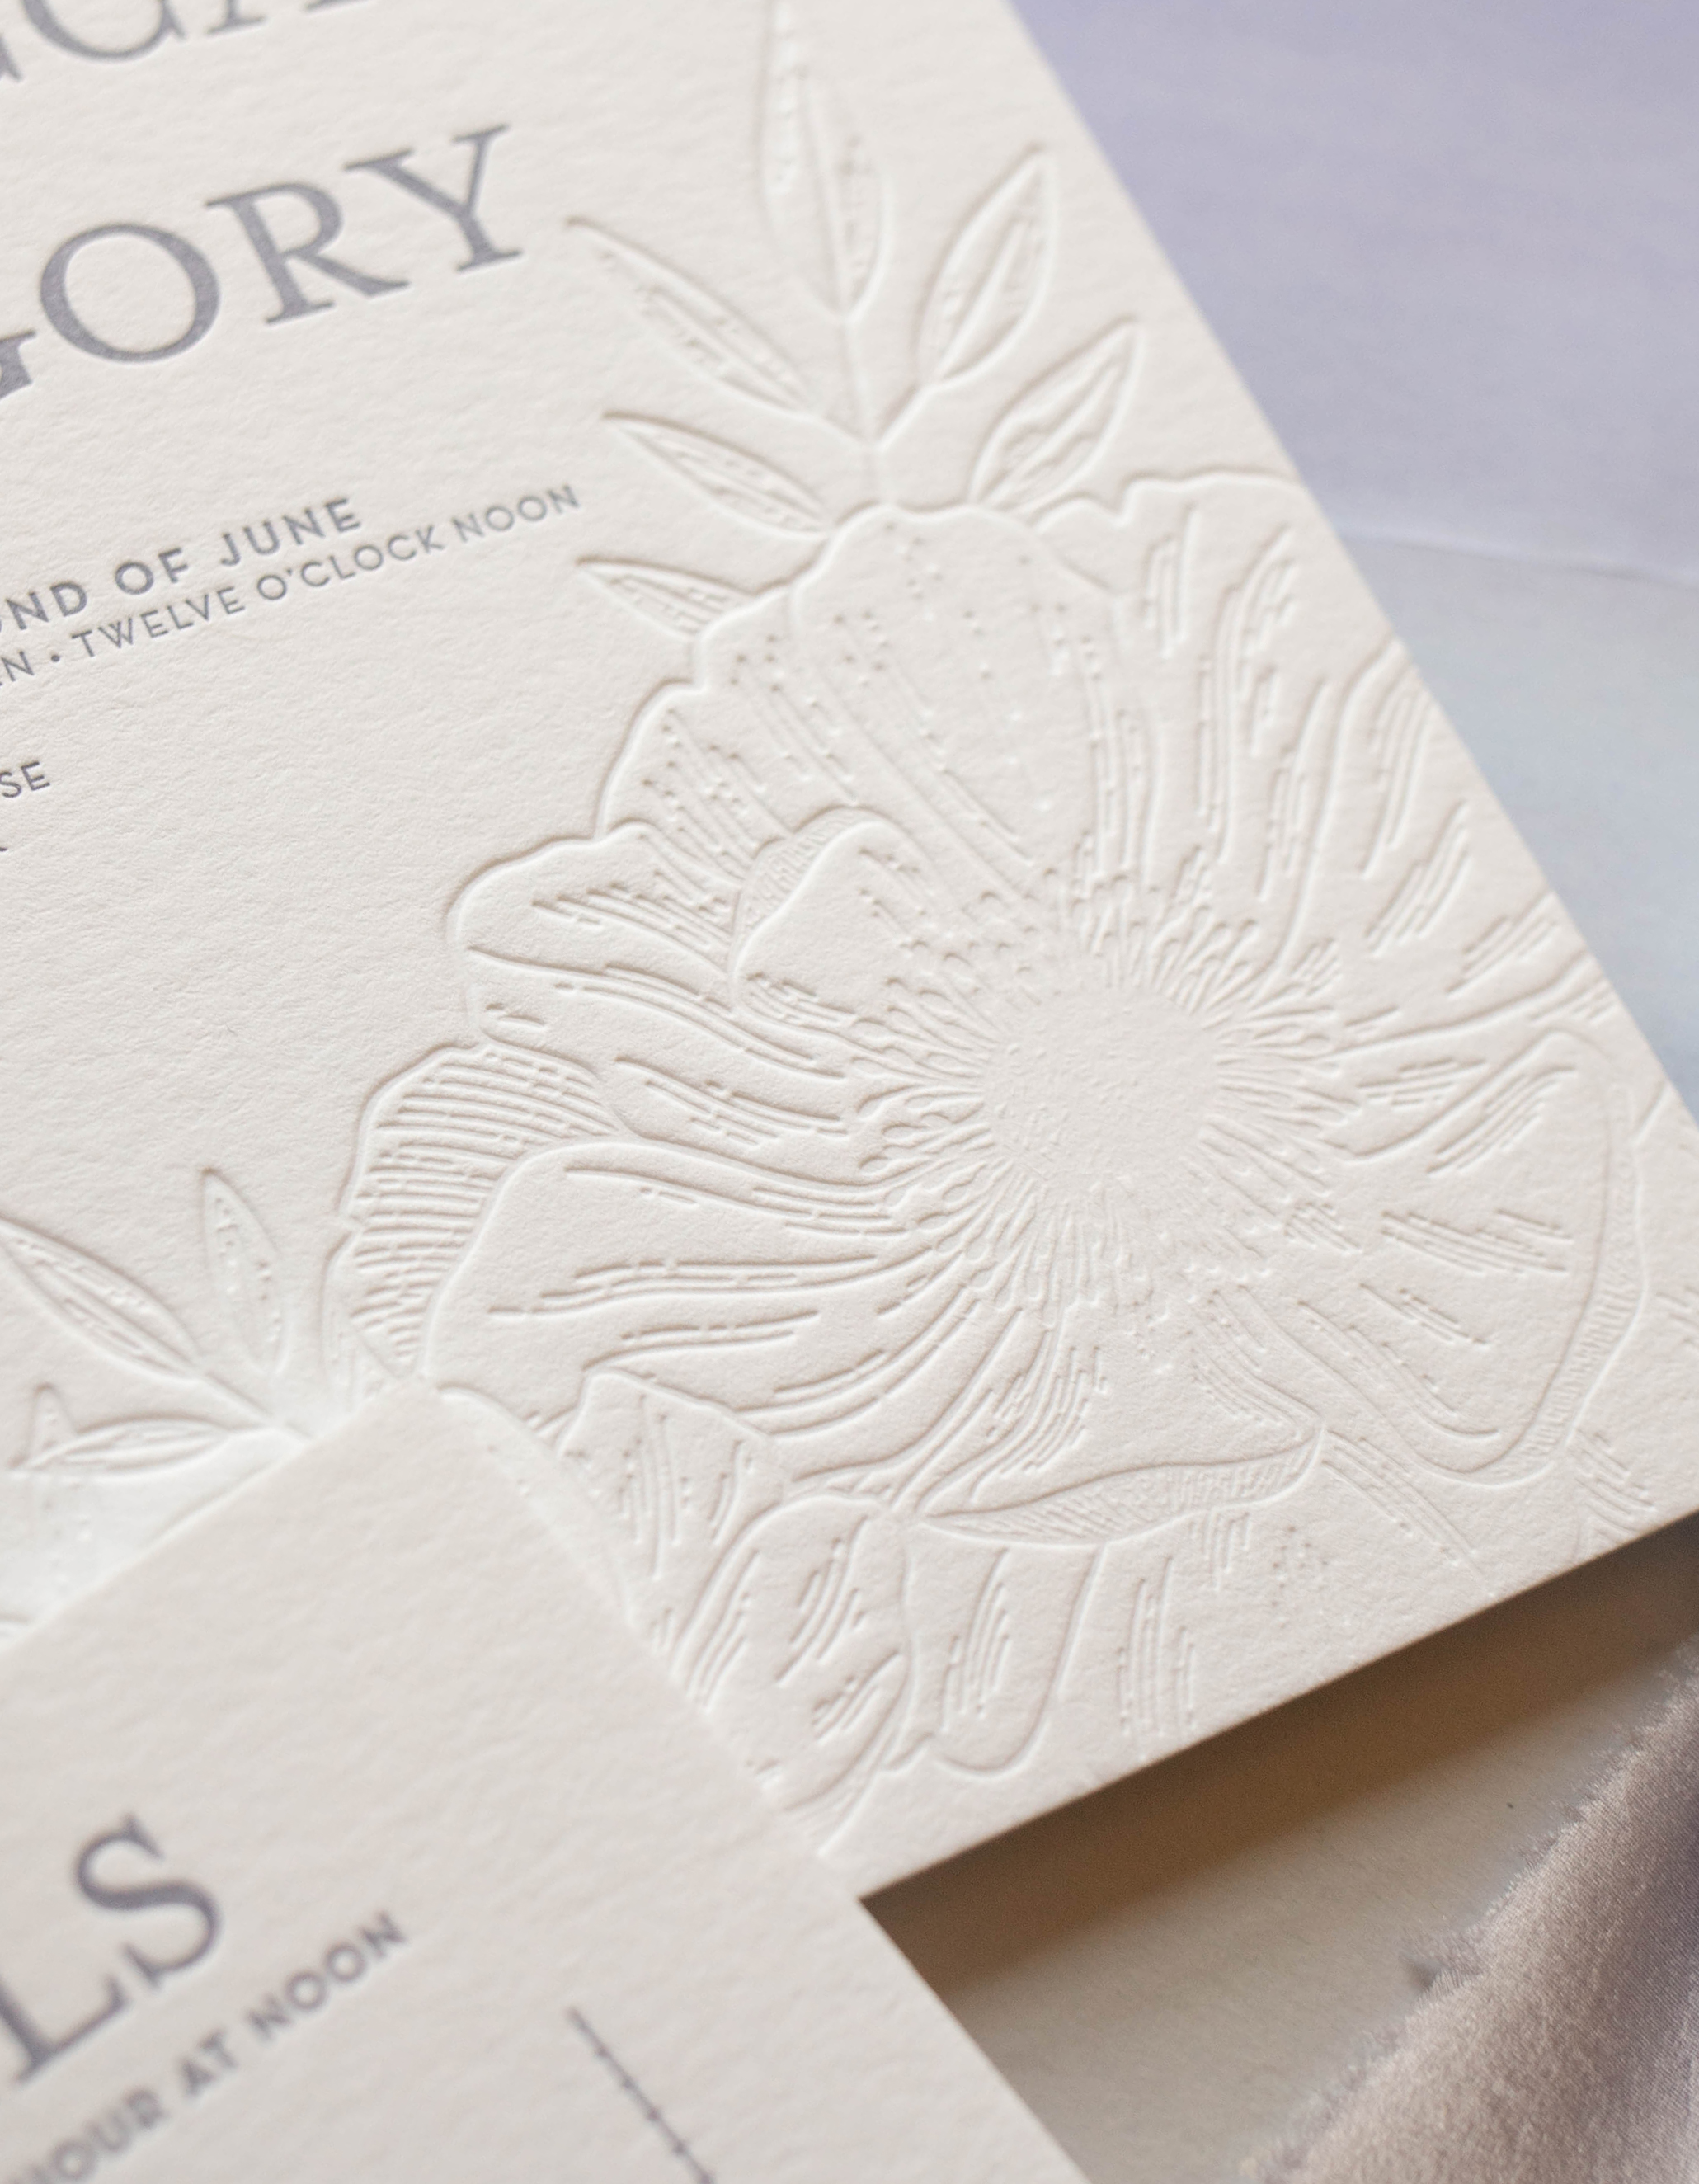 unique modern letterpress wedding invitation, floral illustration inspired by nature